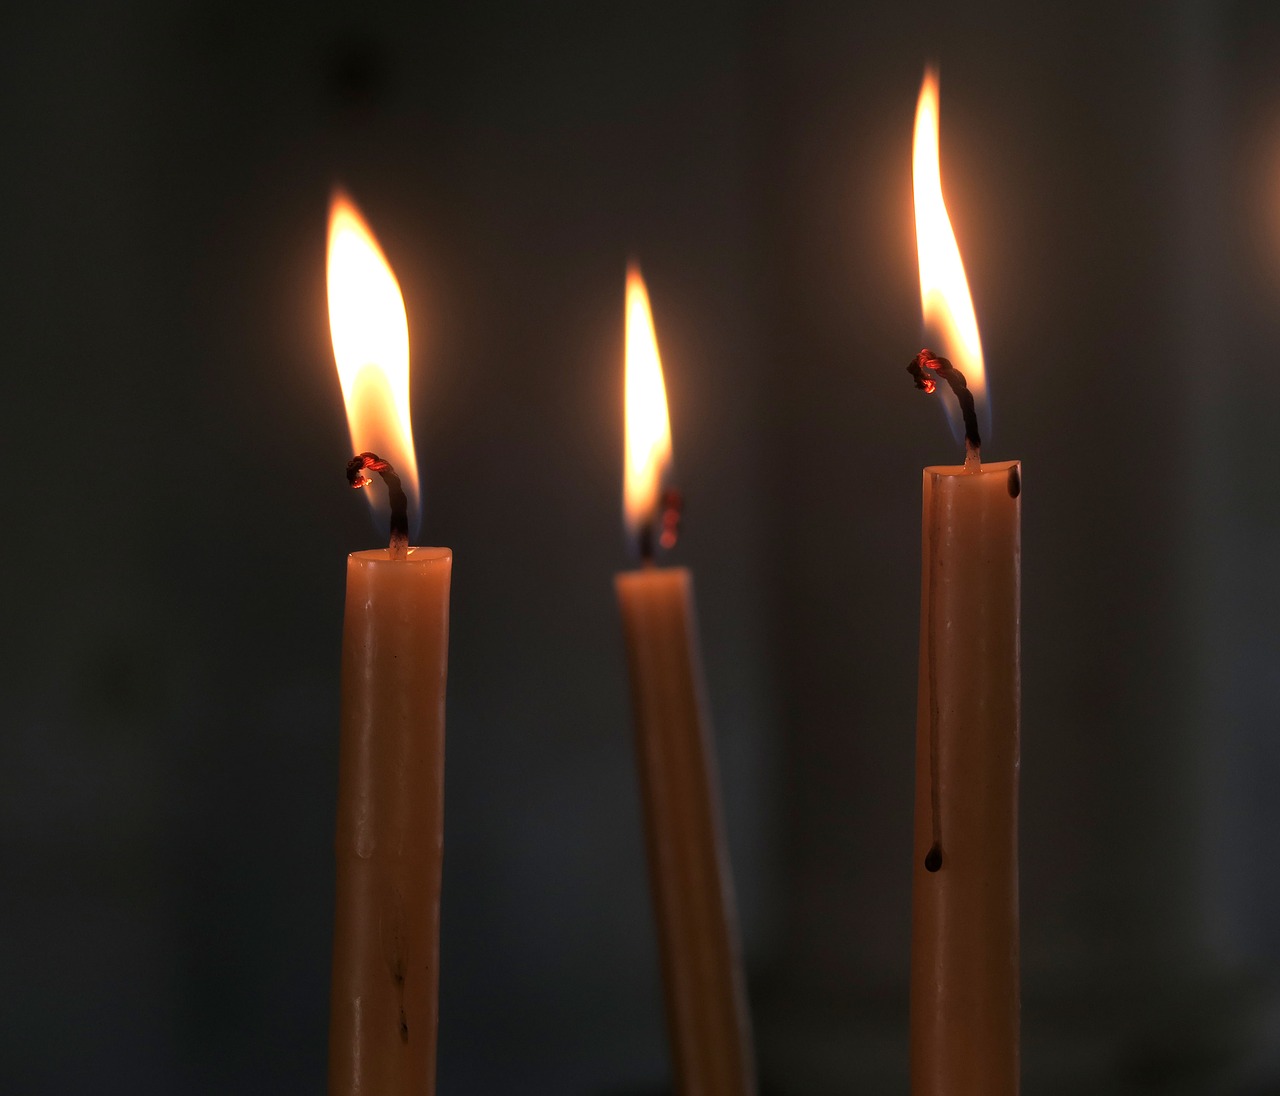 Горят три свечи. Свечи. Три церковные свечи. Горящие свечи. Горящие свечи в церкви.